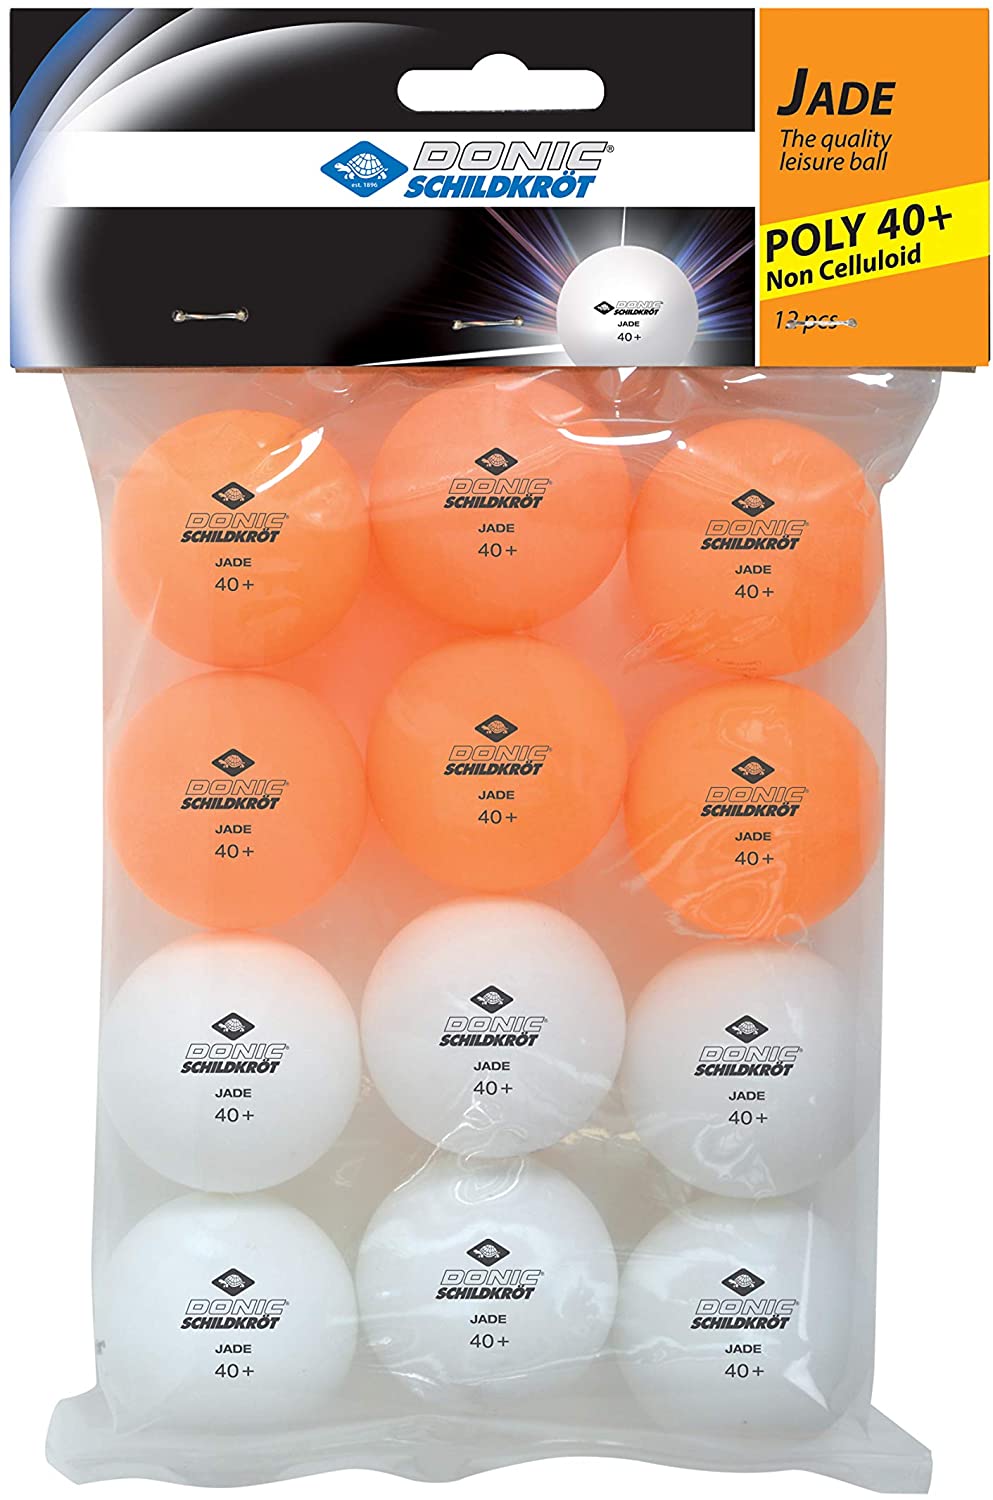 Poly 40 12 balls 6x White 6x Quality Donic-Schildkröt Jade Table Tennis Balls 